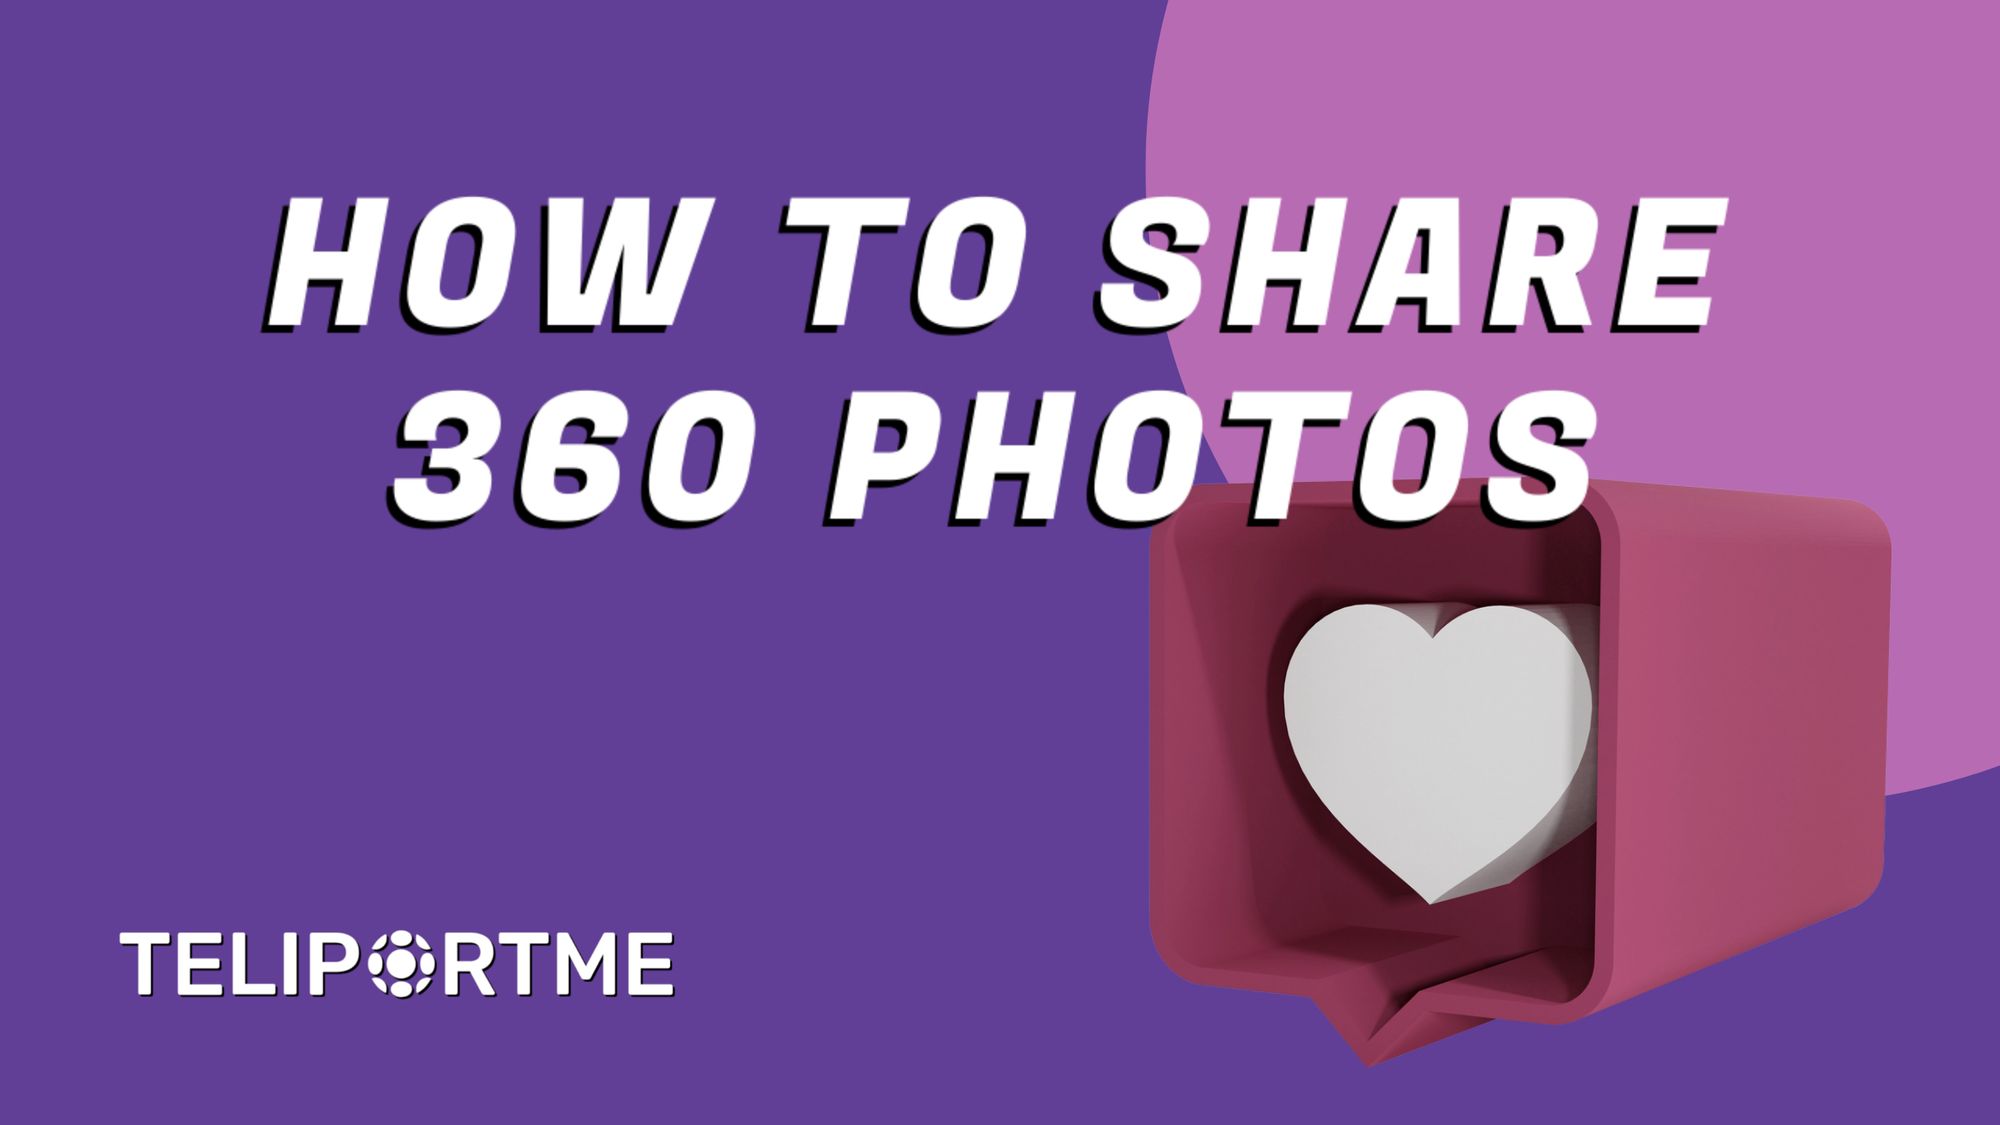 How to share 360 photos